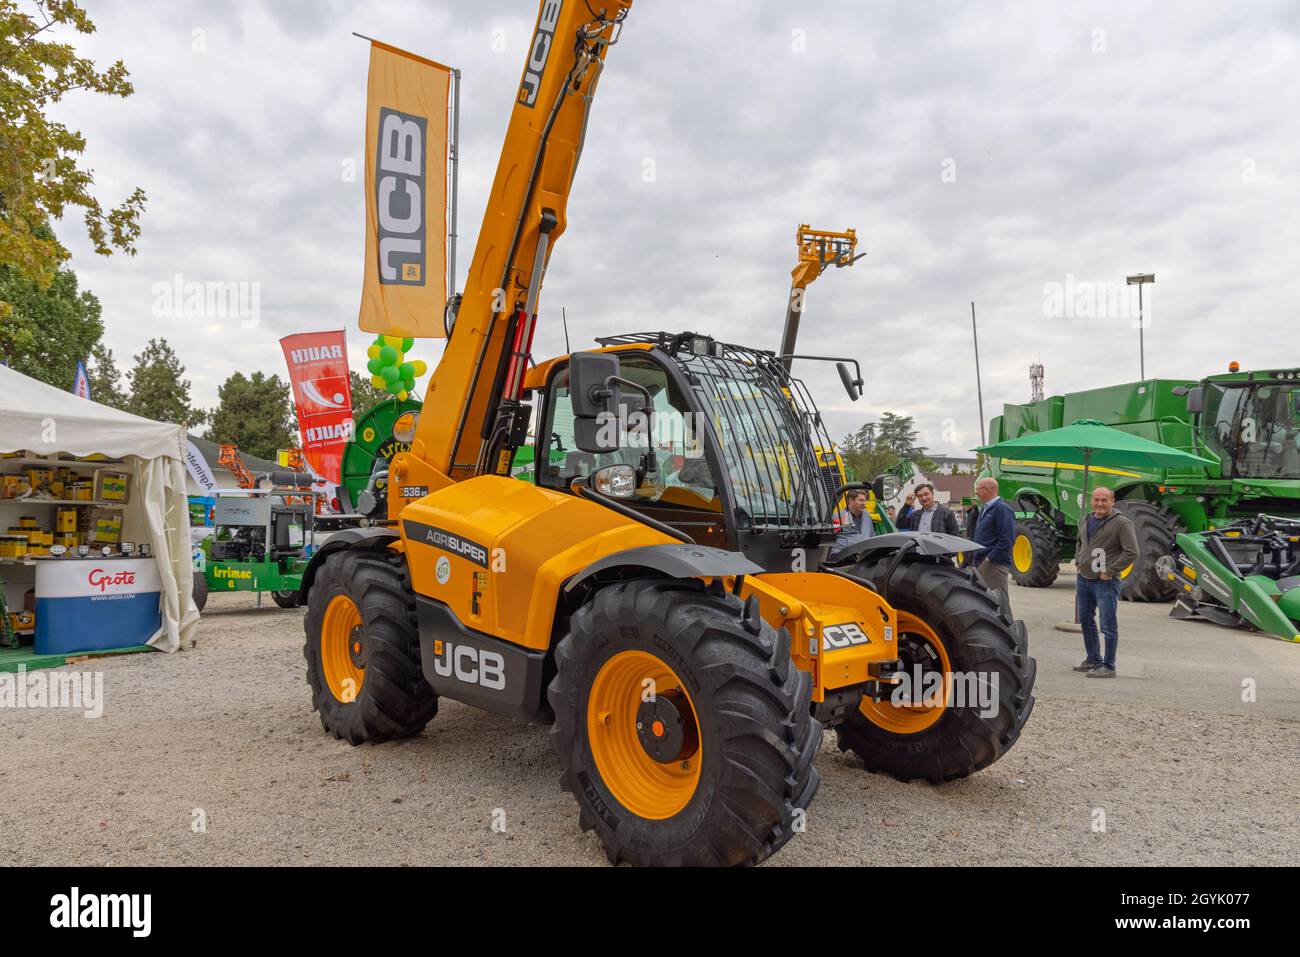 Novi Sad, Serbia - September 21, 2021: Jcb Farm Equipment Machines at Agriculture Expo Trade Fair. Stock Photo